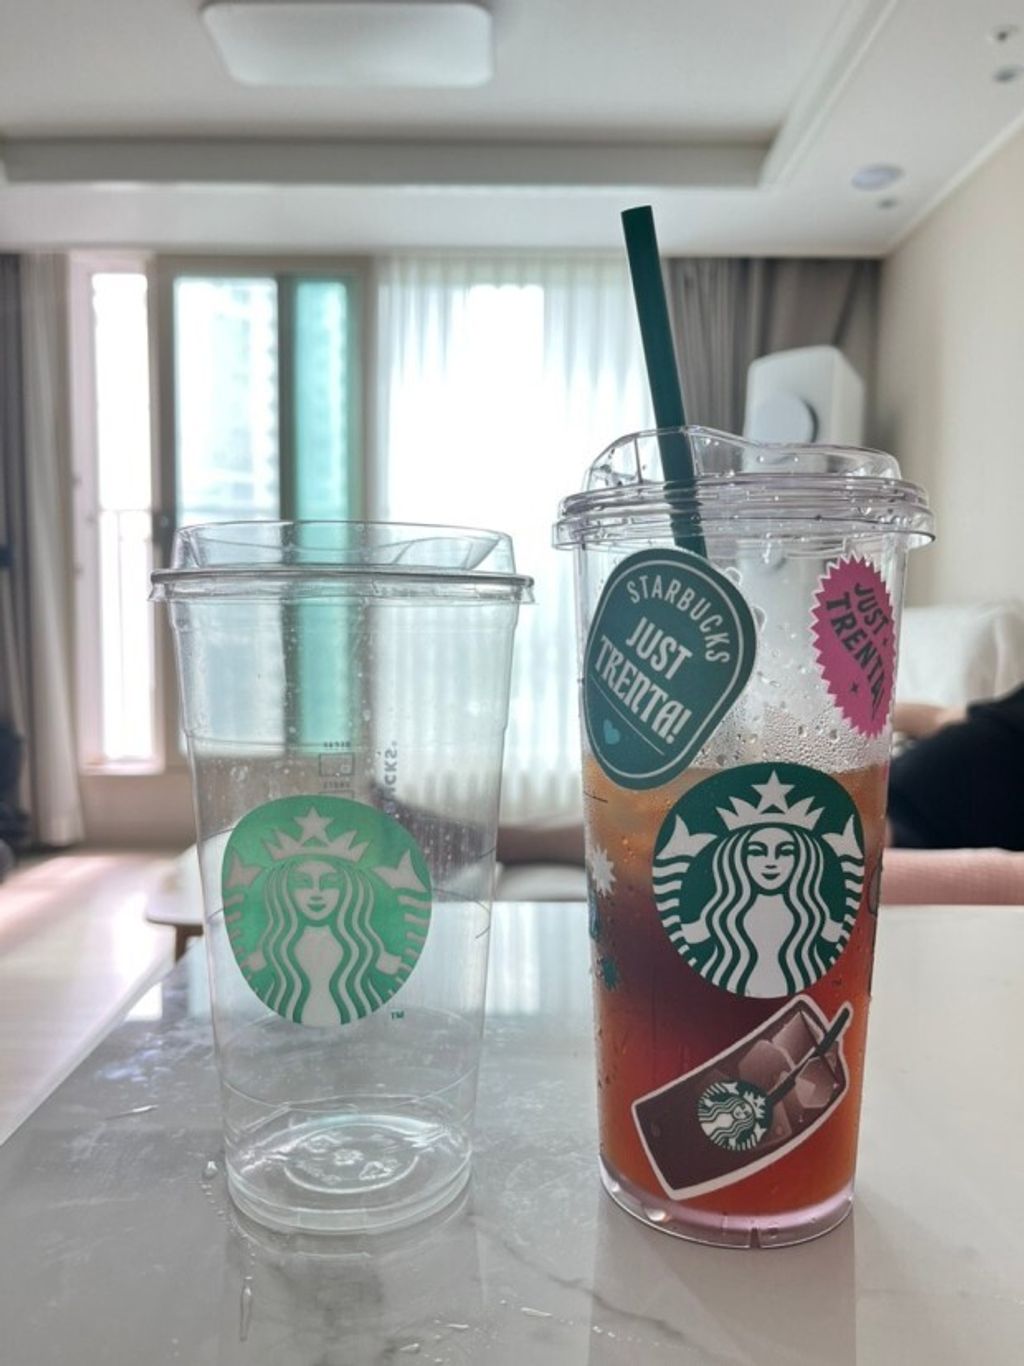 Starbucks Korea Siren Trenta Cold Cup 887ml with Free Decorative